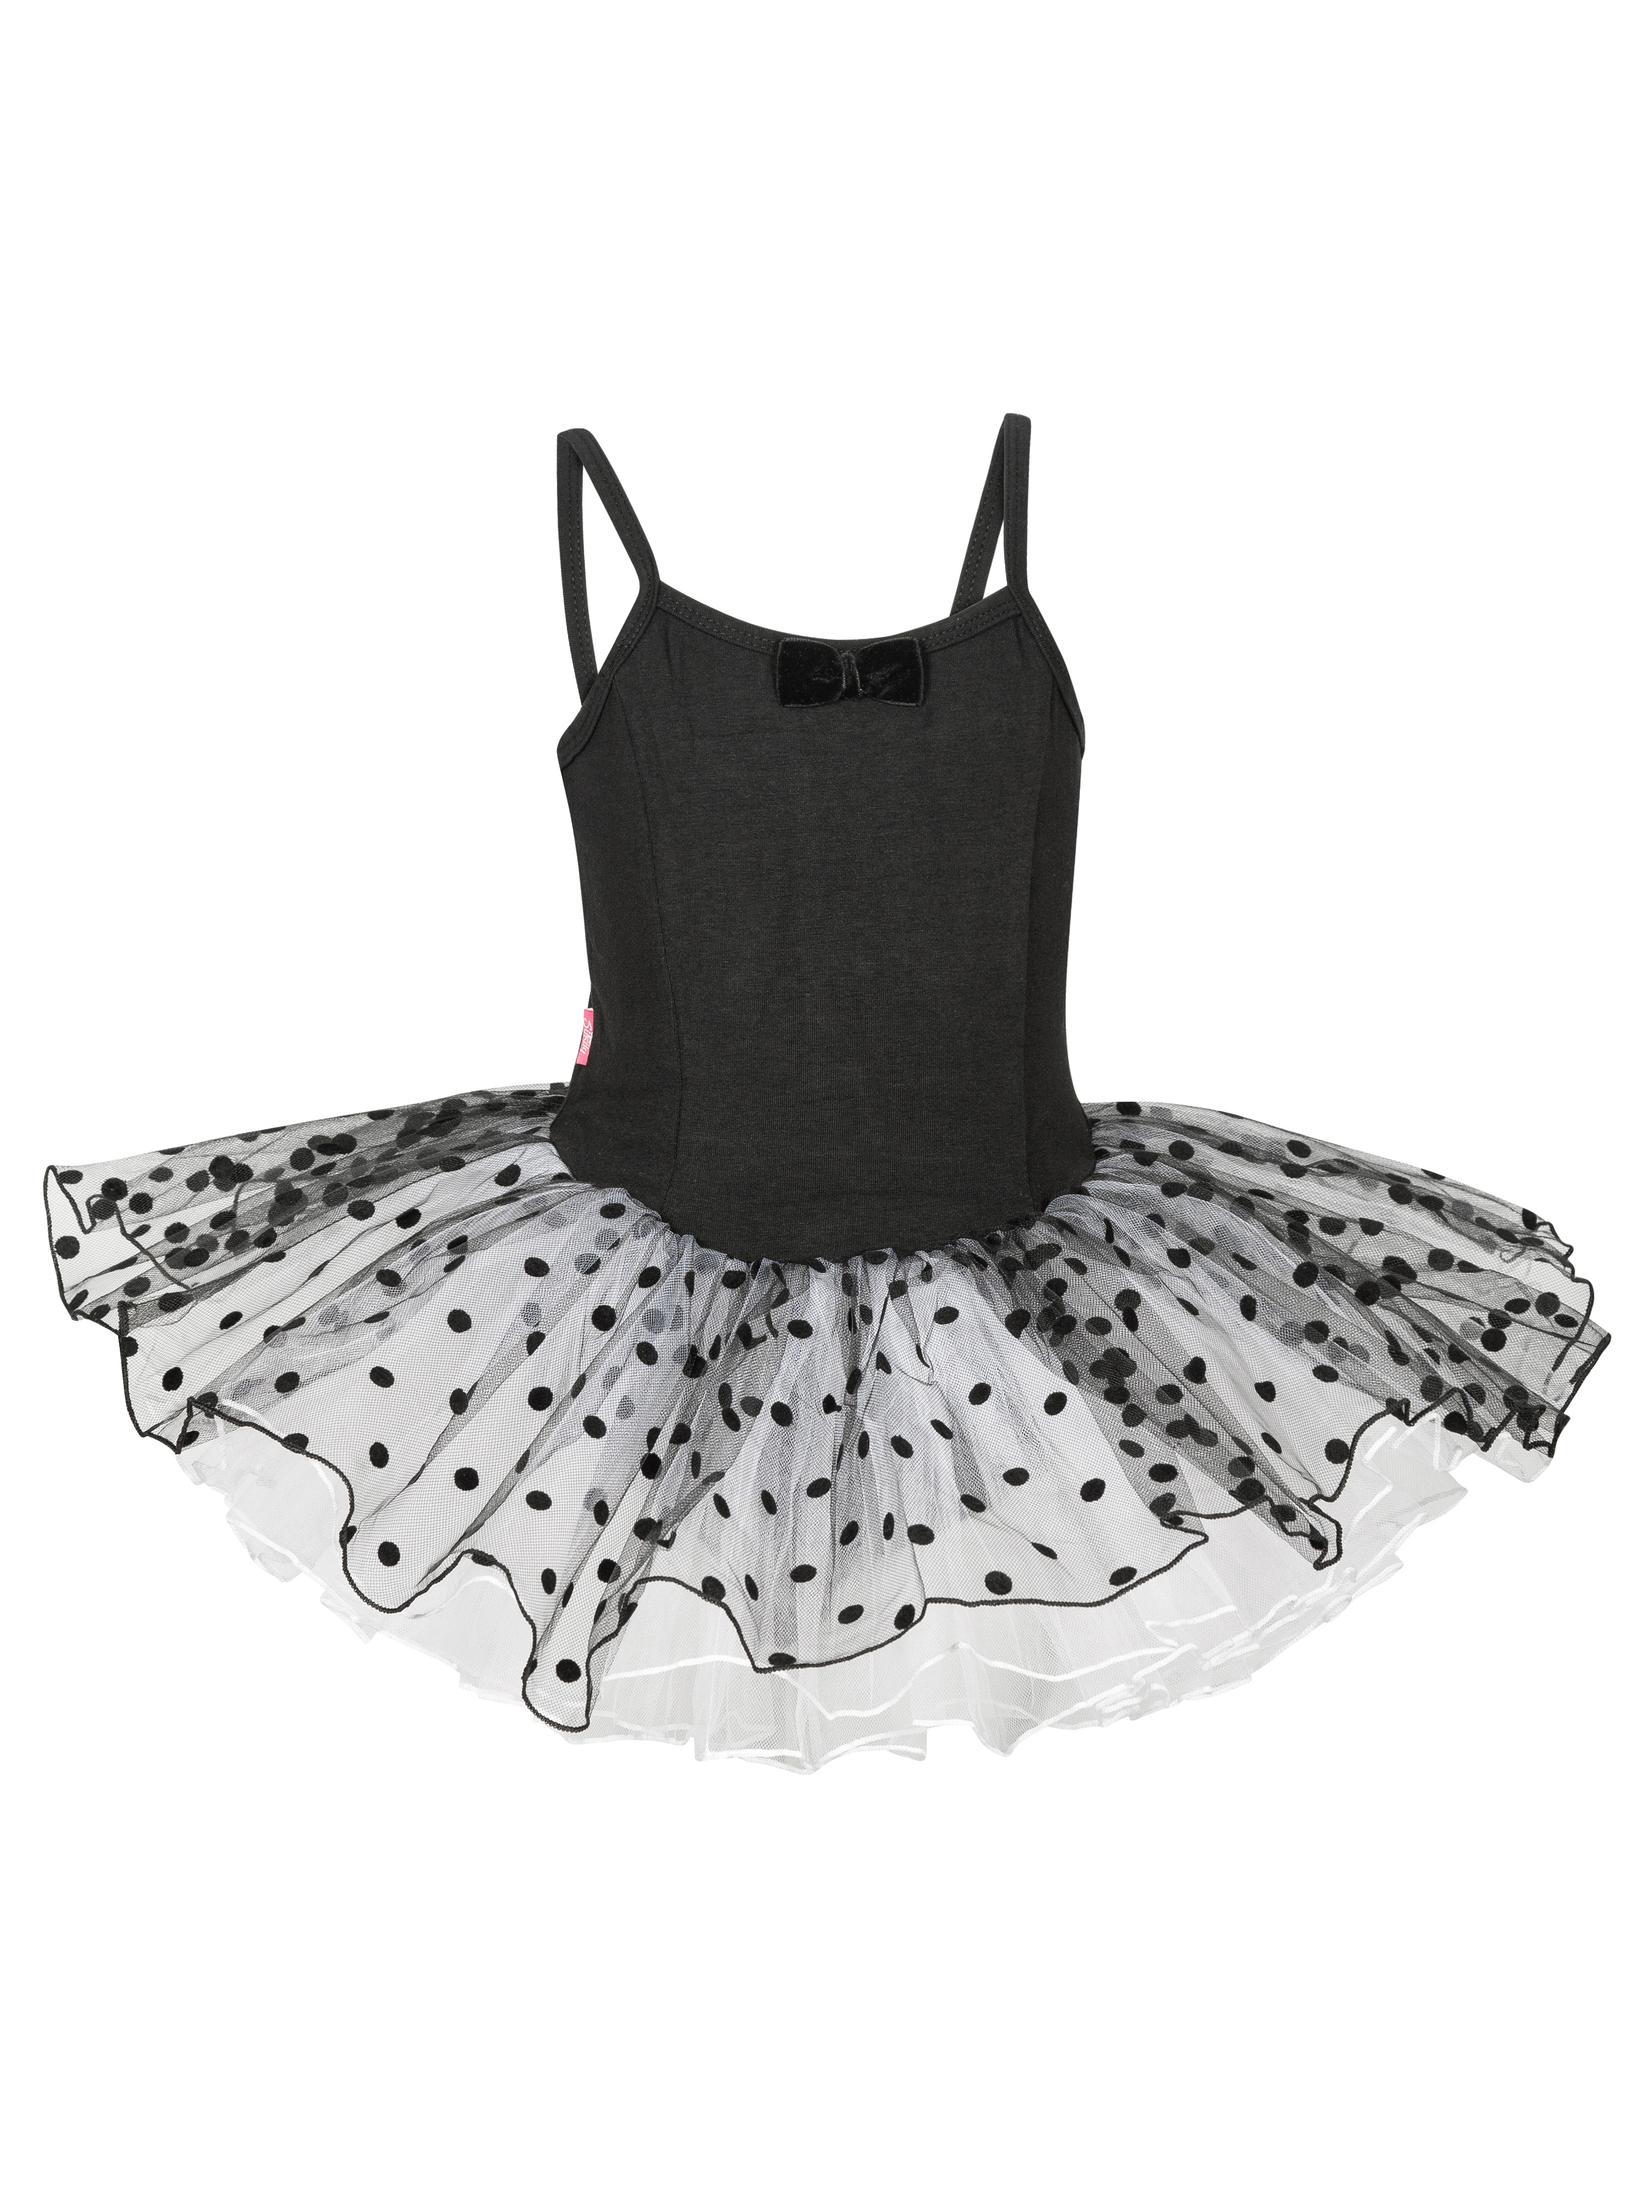 Selected image for GALA UNIQ Triko sa suknjom za balet za devojčice 1023B crni